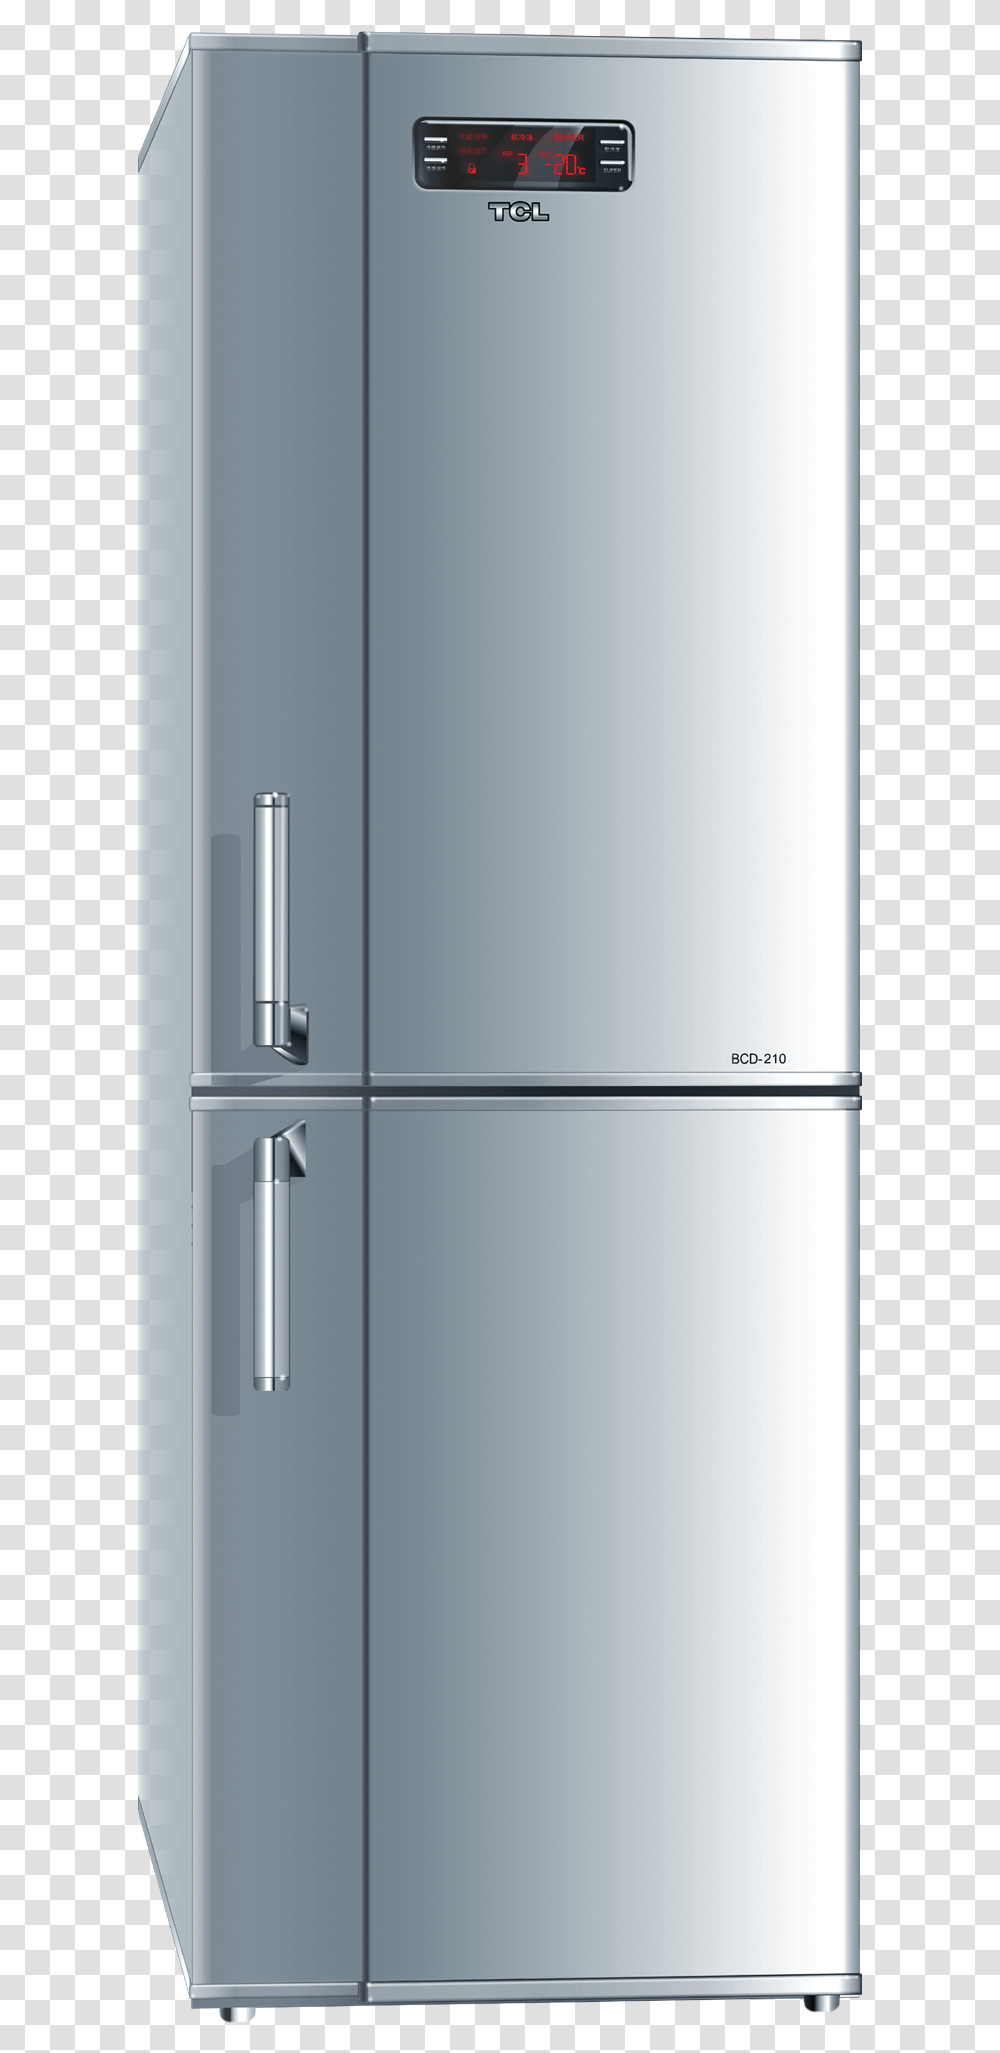 Fridge Vector Top View Refrigerator, Appliance Transparent Png